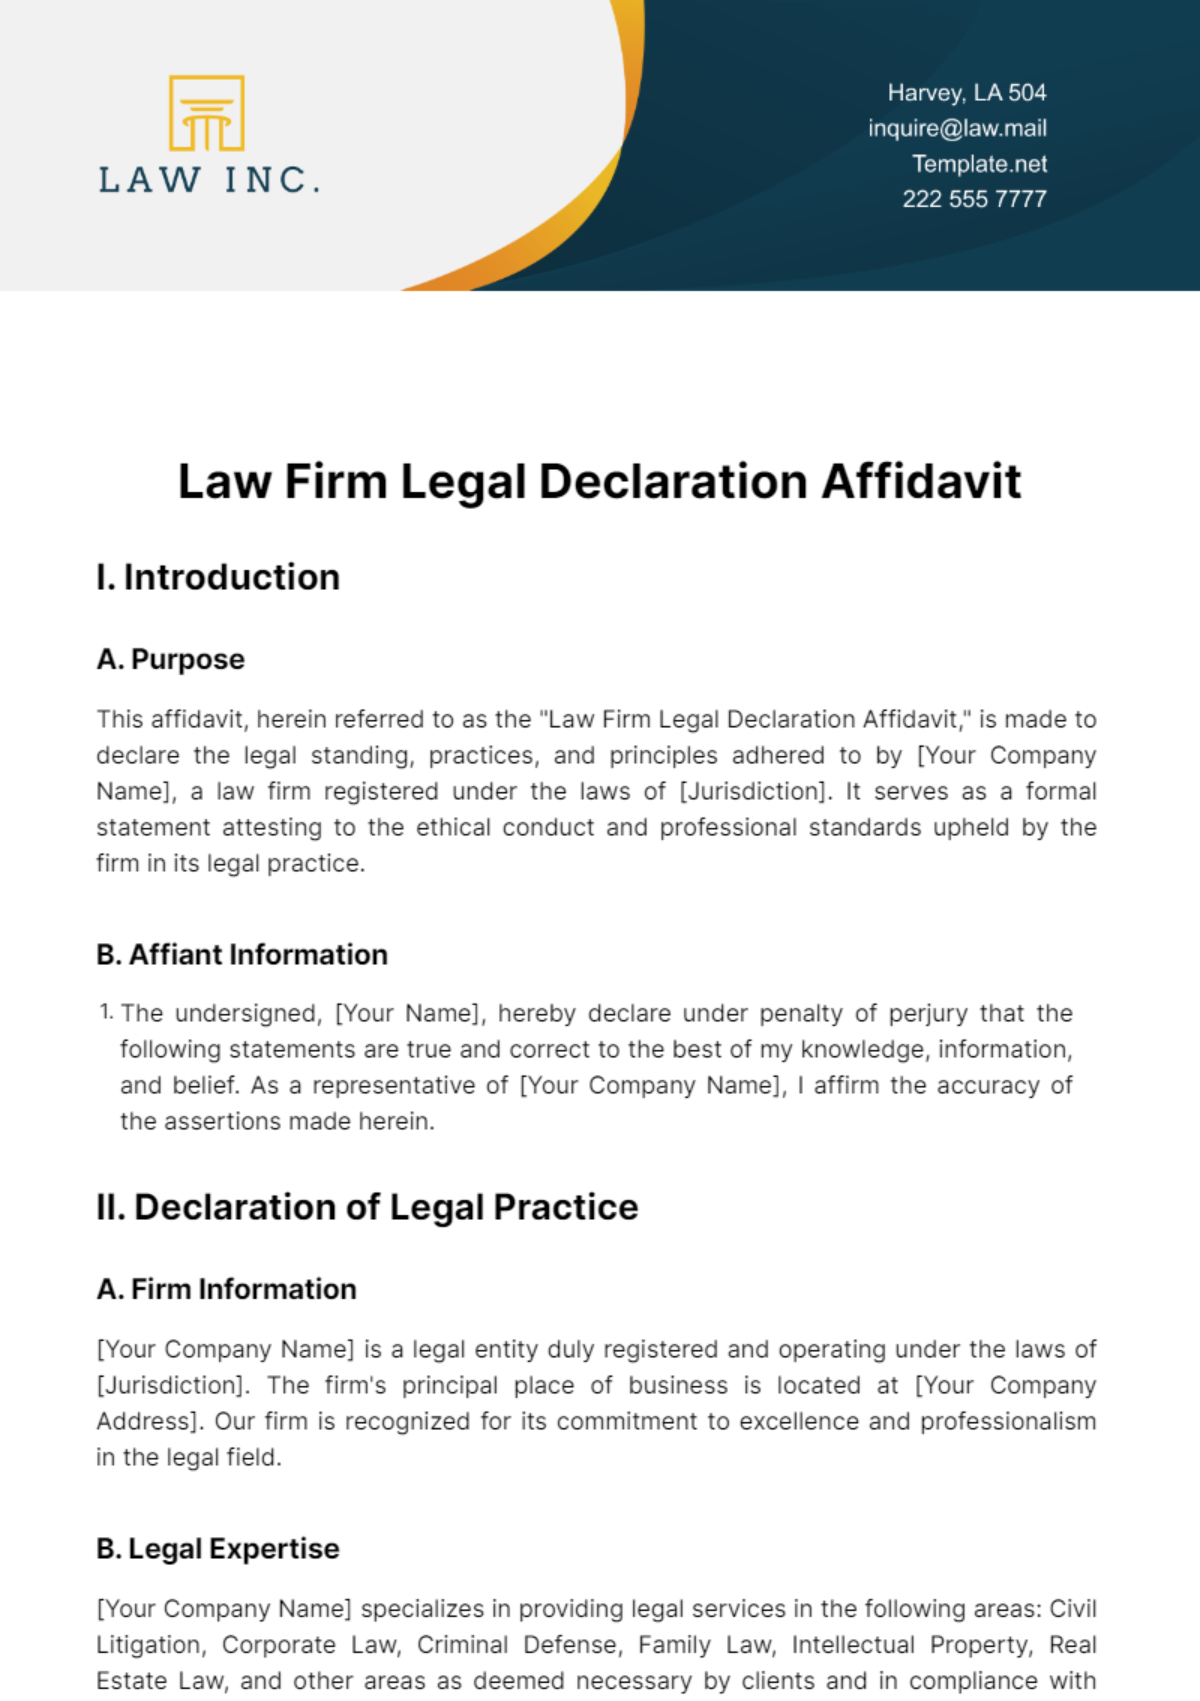 Law Firm Legal Declaration Affidavit Template